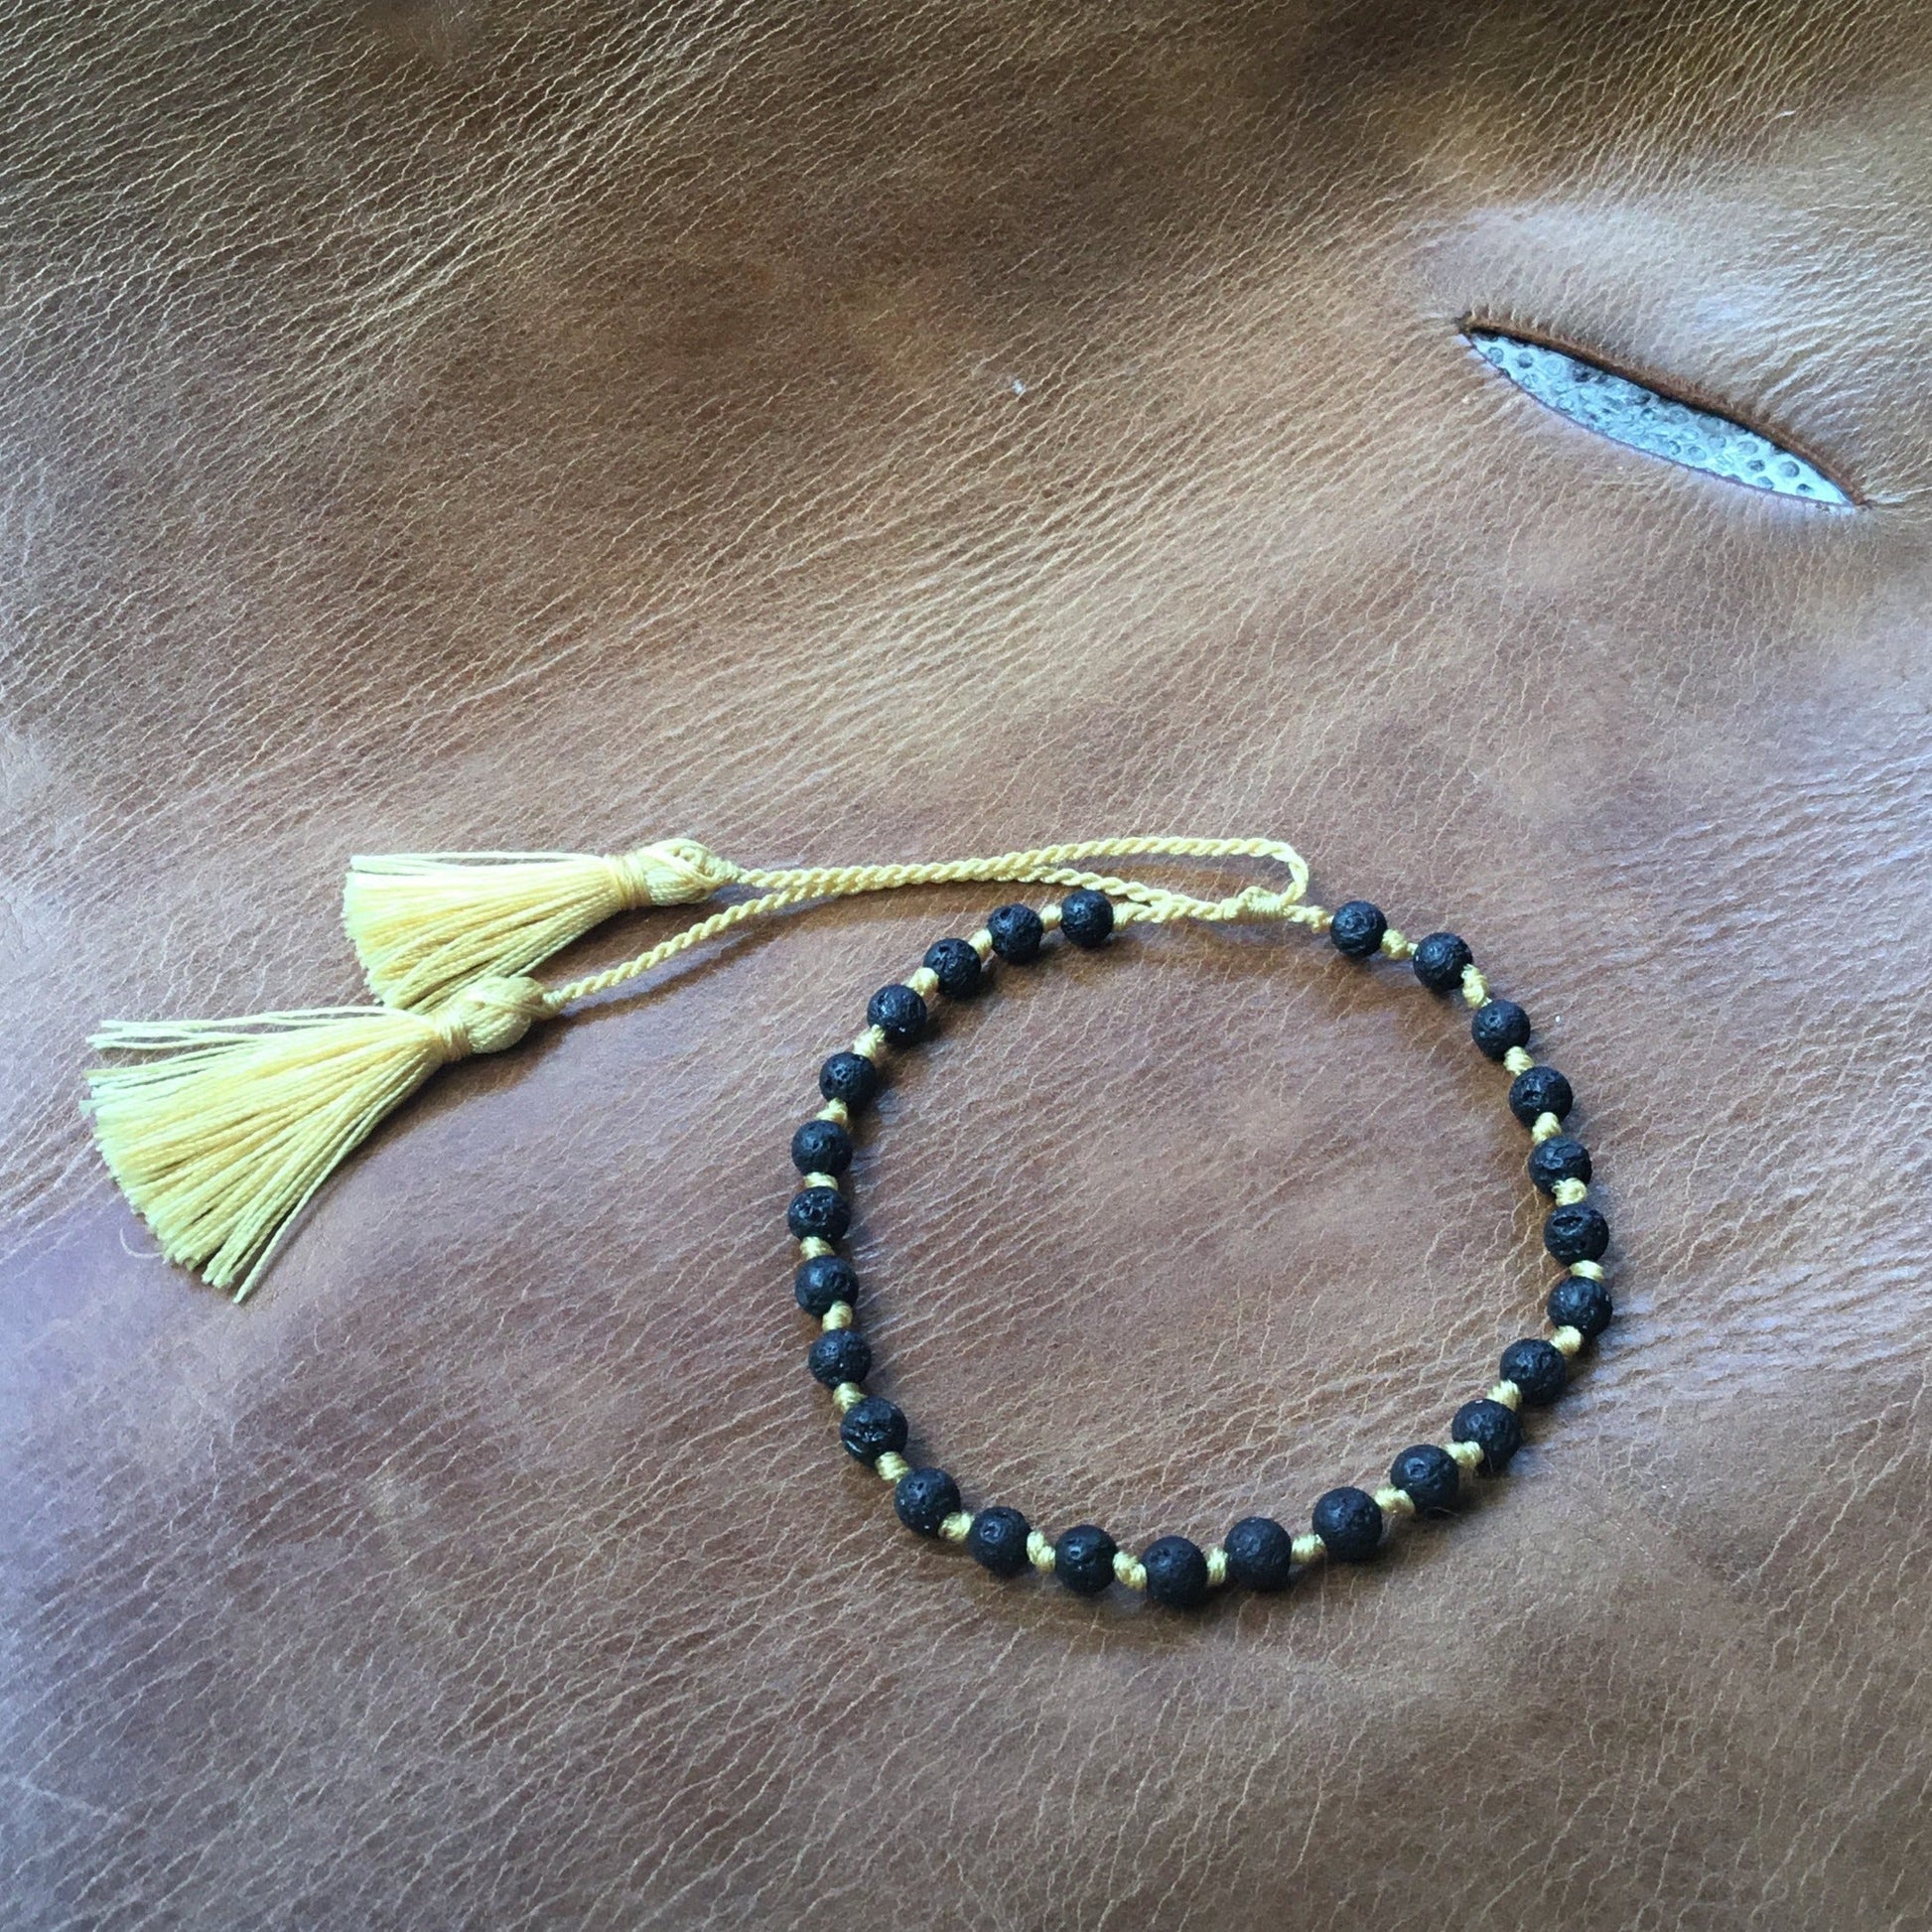 Adjustable lava bracelet, grounding jewelry.